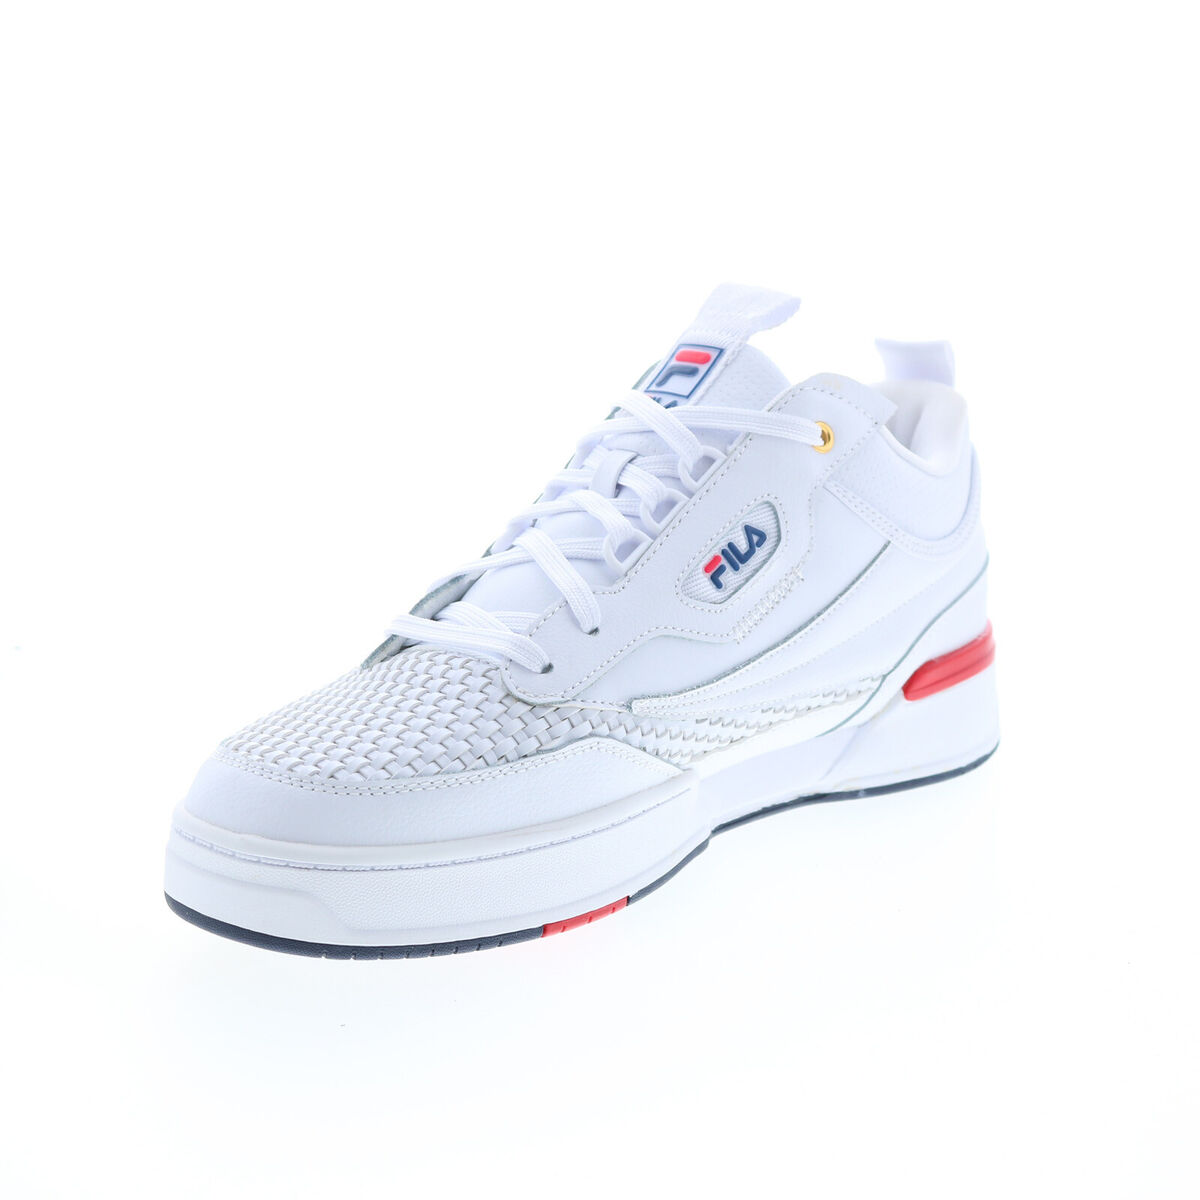 lava Margaret Mitchell Bemiddelaar Fila T-1 Mid Saga 1FM01738-125 Mens White Leather Lifestyle Sneakers Shoes  | eBay